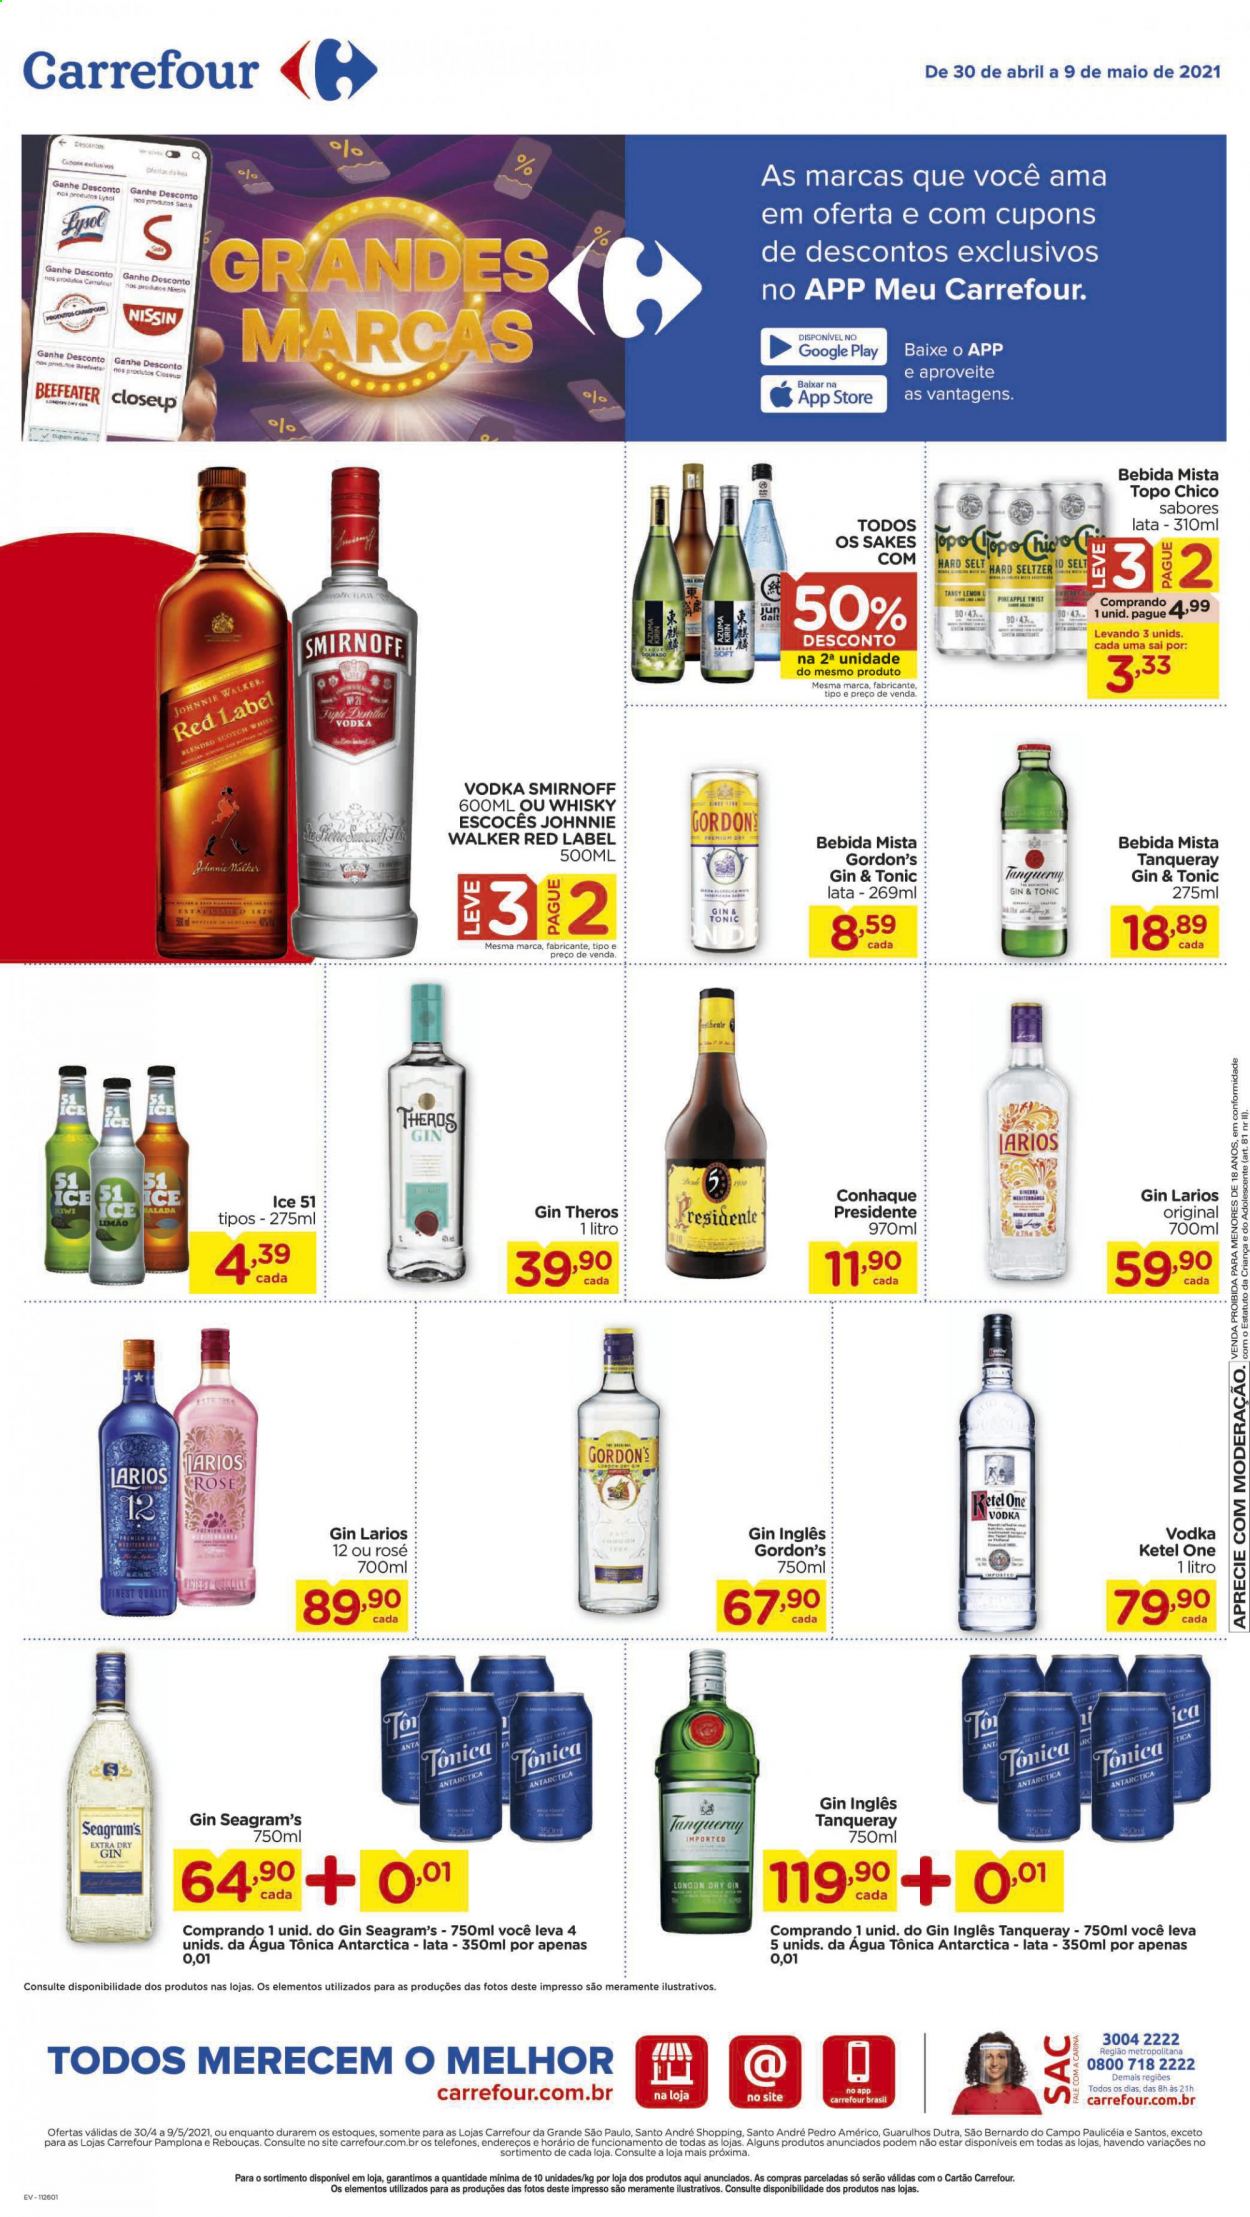 thumbnail - Folheto Carrefour Hiper - 30/04/2021 - 09/05/2021 - Produtos em promoção - Antárctica, água tónica, Beefeater, gin, vodka, whiskey, Smirnoff, Johnnie Walker. Página 10.